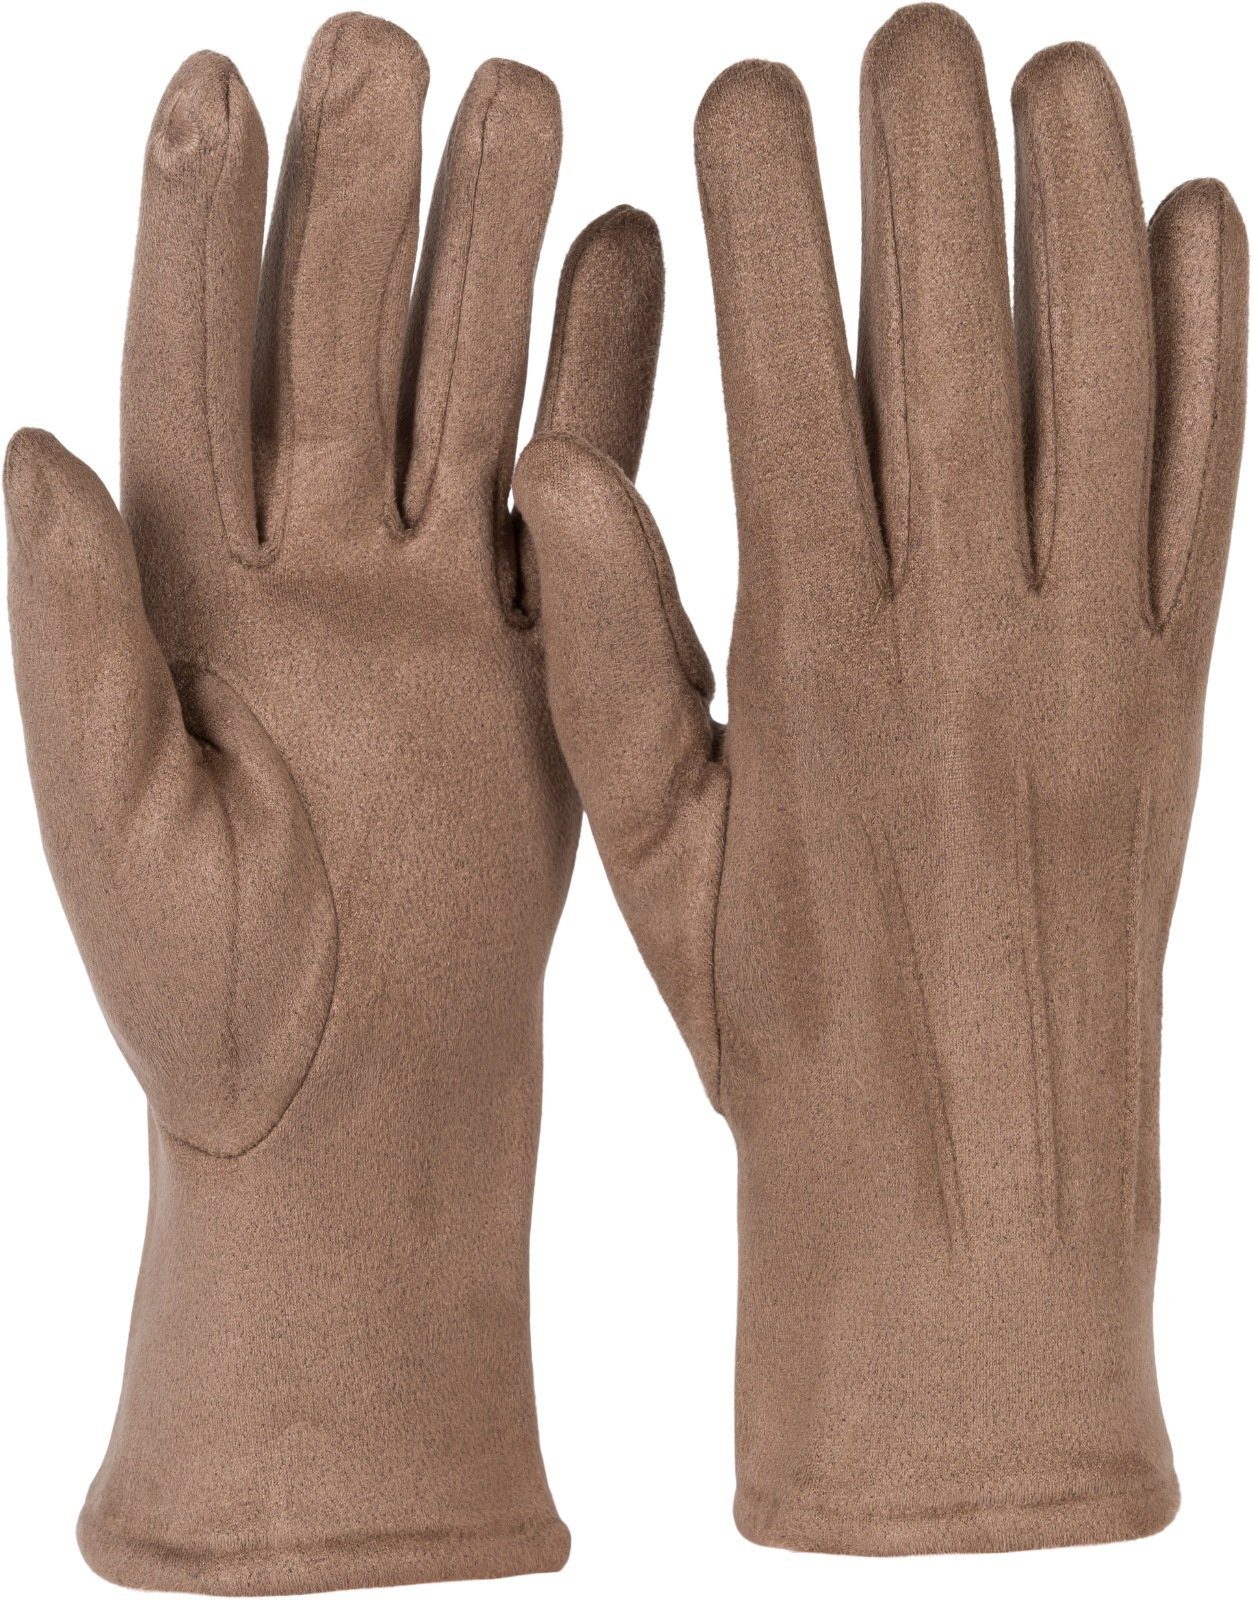 styleBREAKER Fleecehandschuhe Einfarbige Touchscreen Handschuhe Ziernähte Taupe